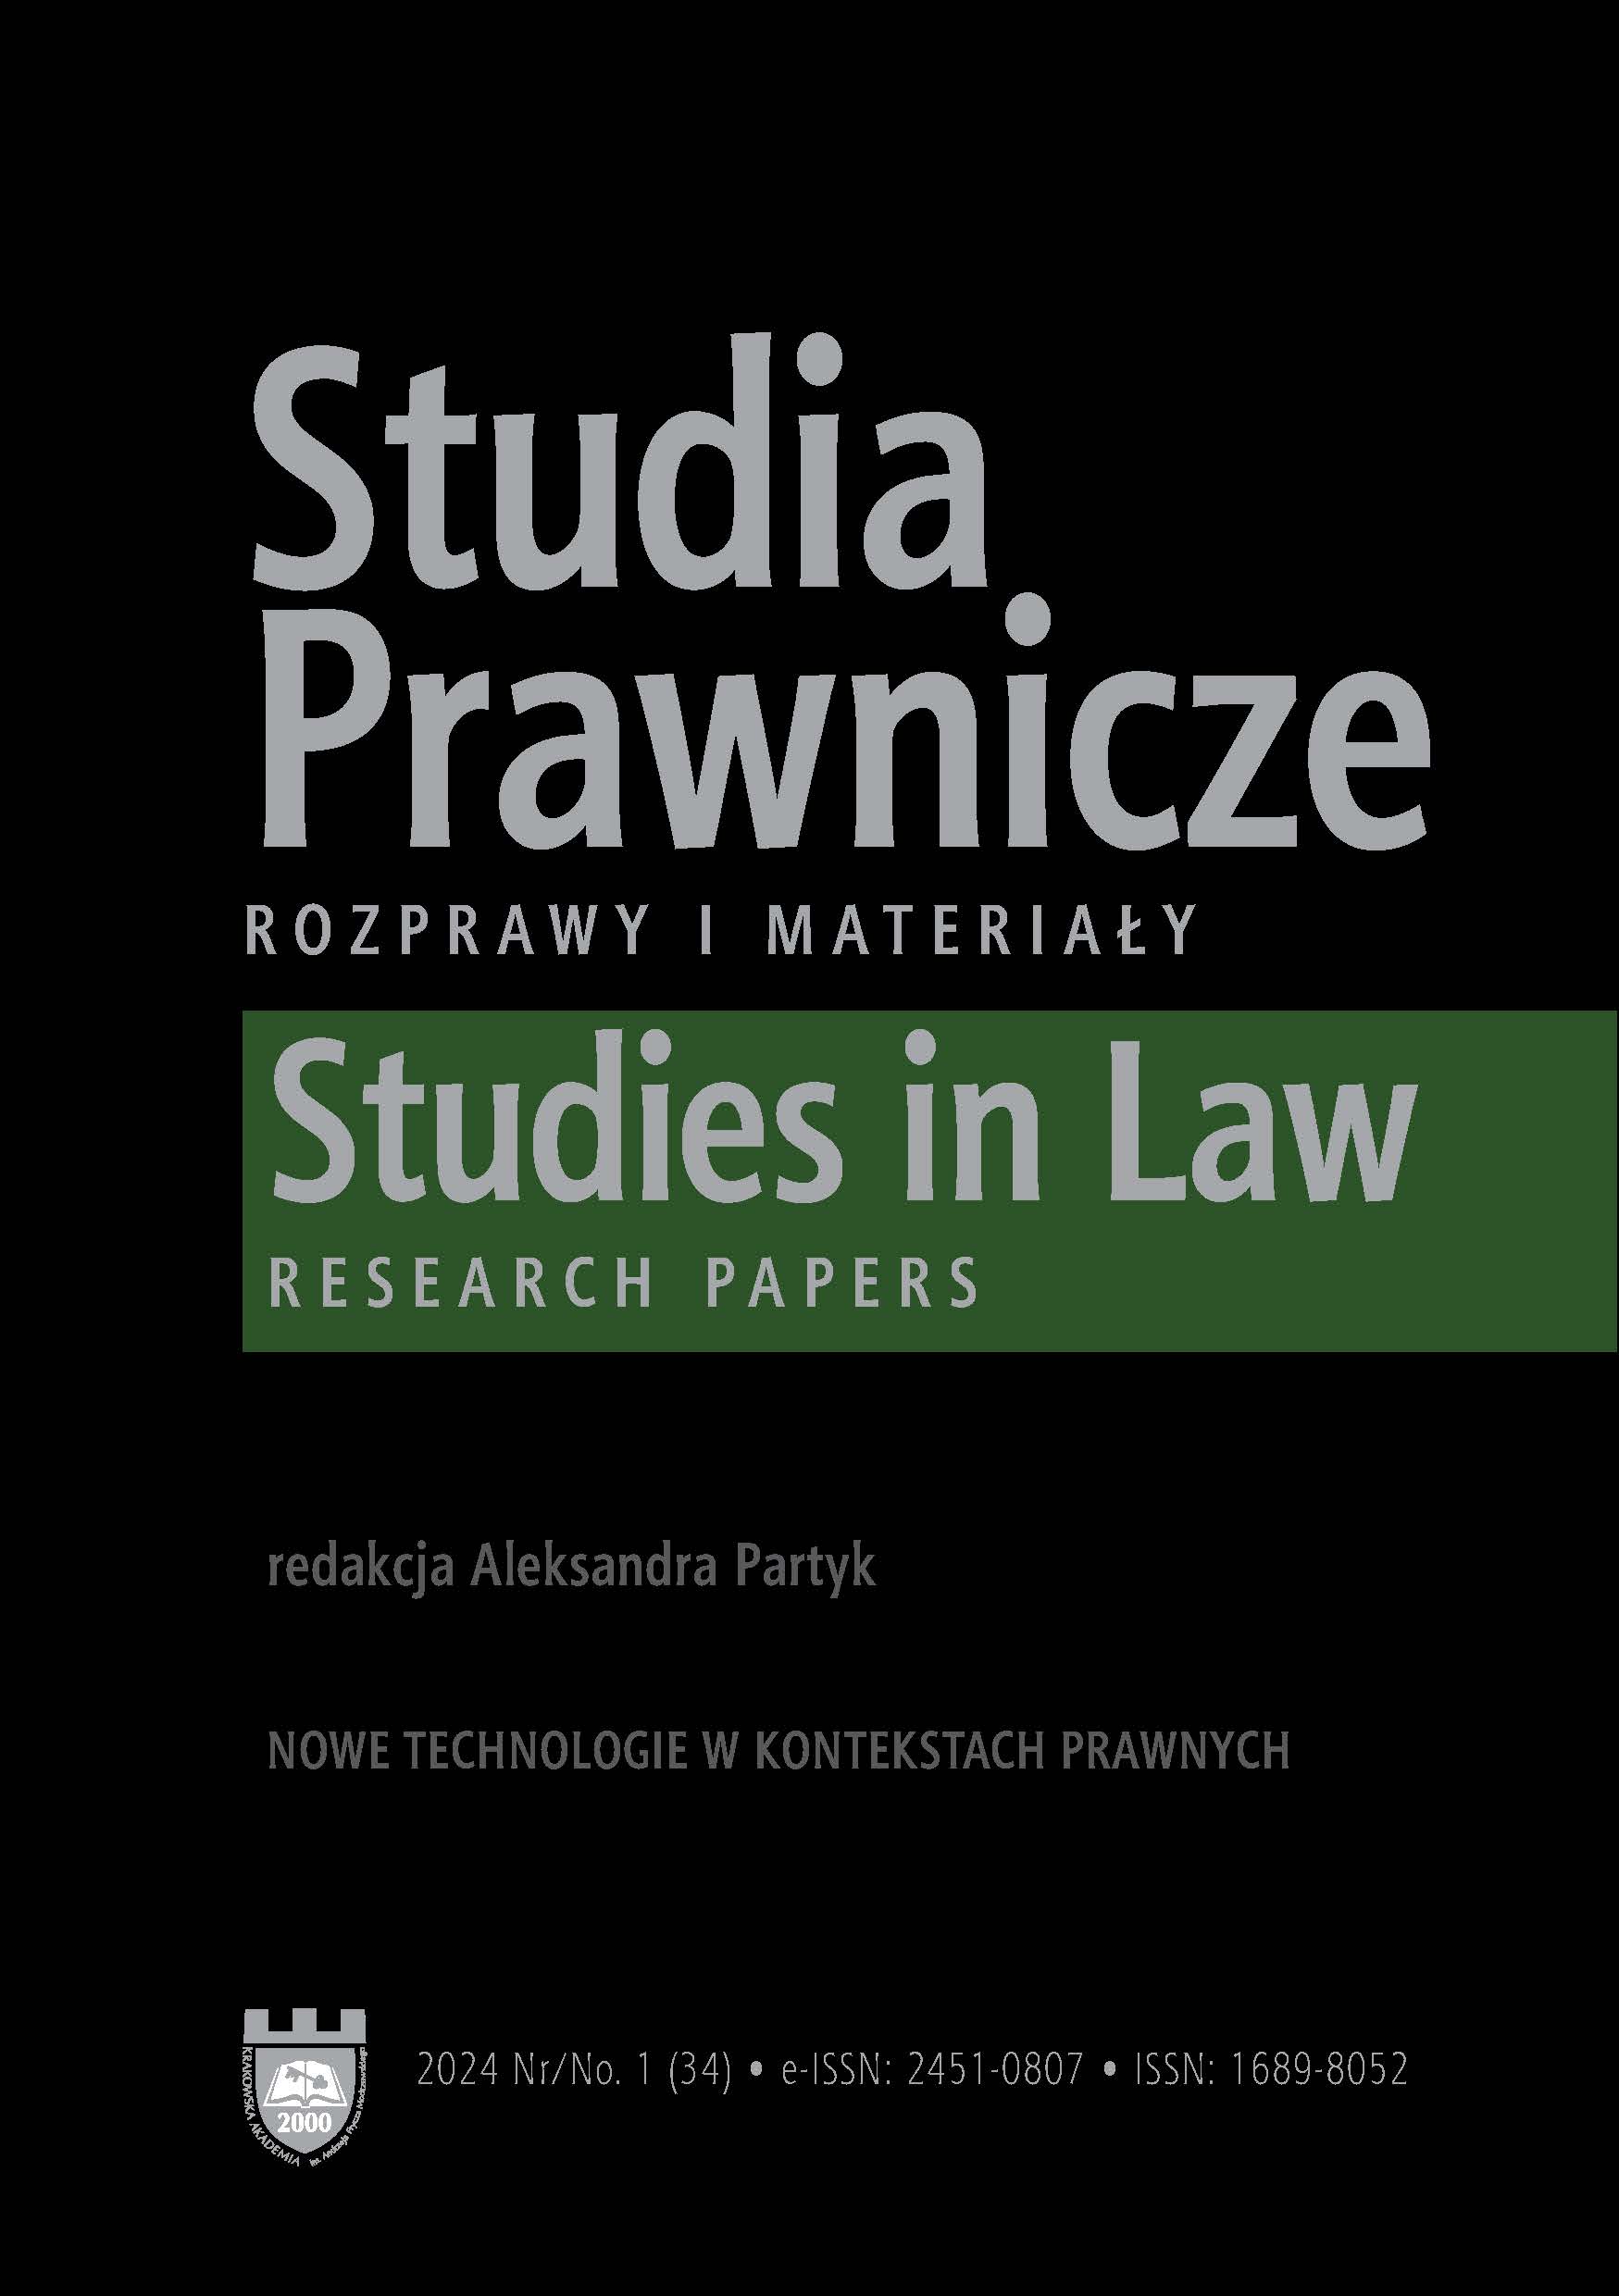 Report on the public defense of the doctoral dissertation of Natalia Karolina Solarska, M.A. Cover Image